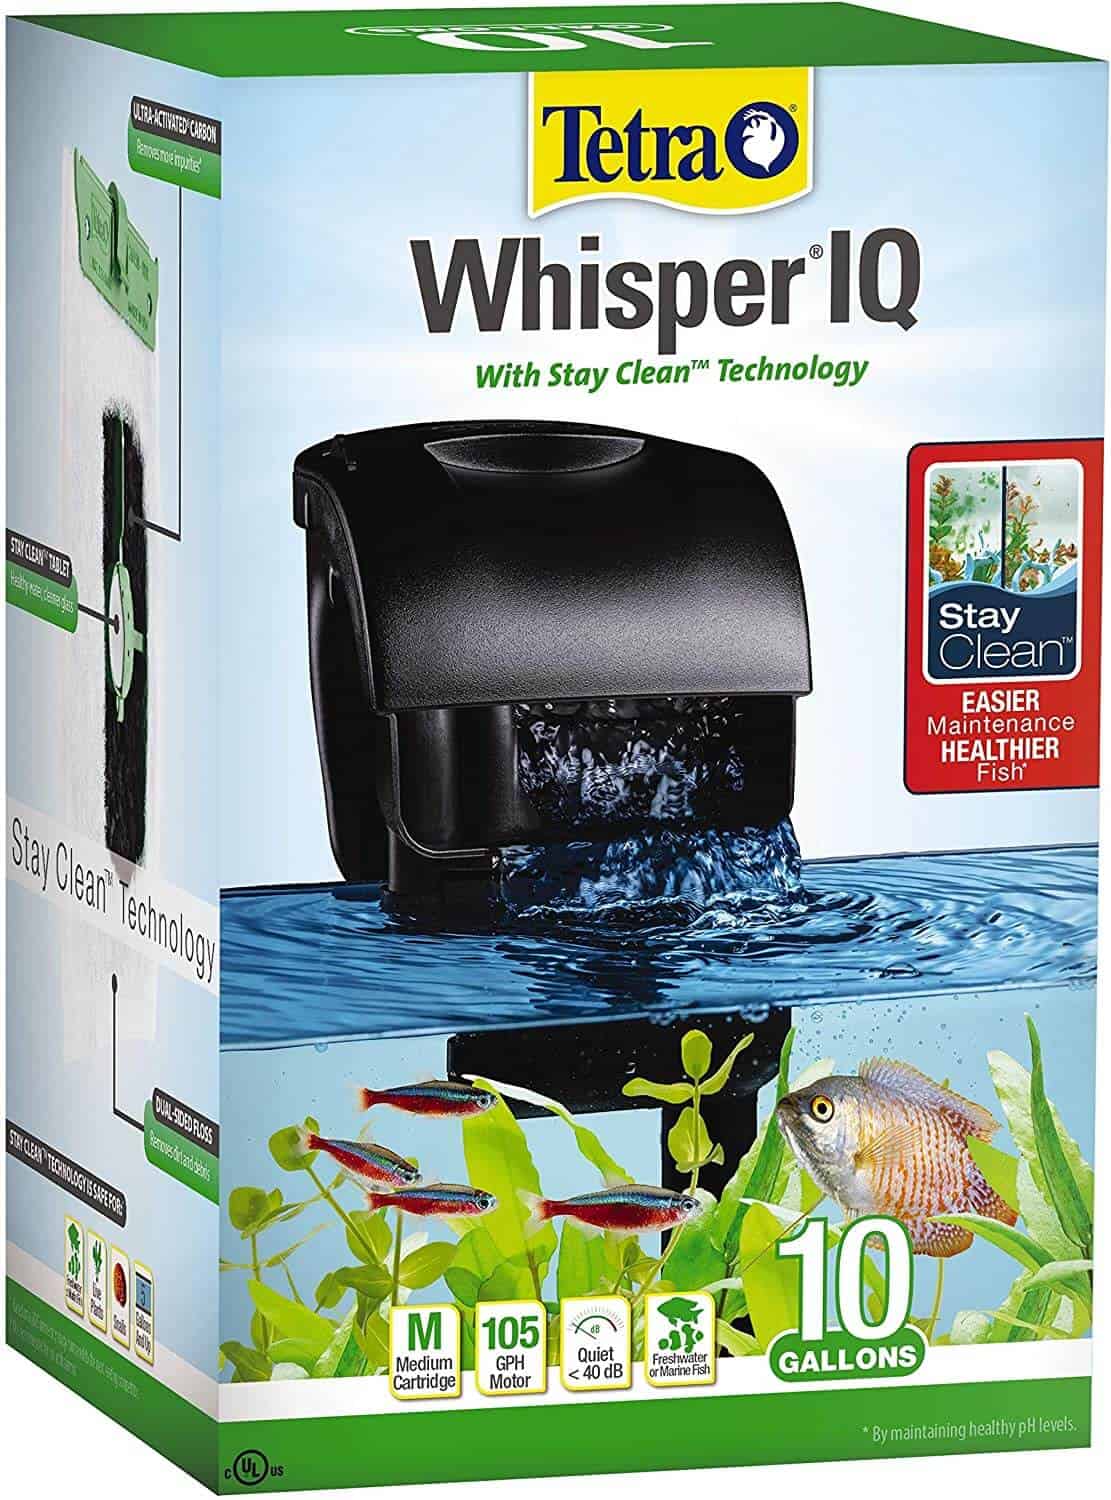 Whisper IQ Power Filter for Aquariums